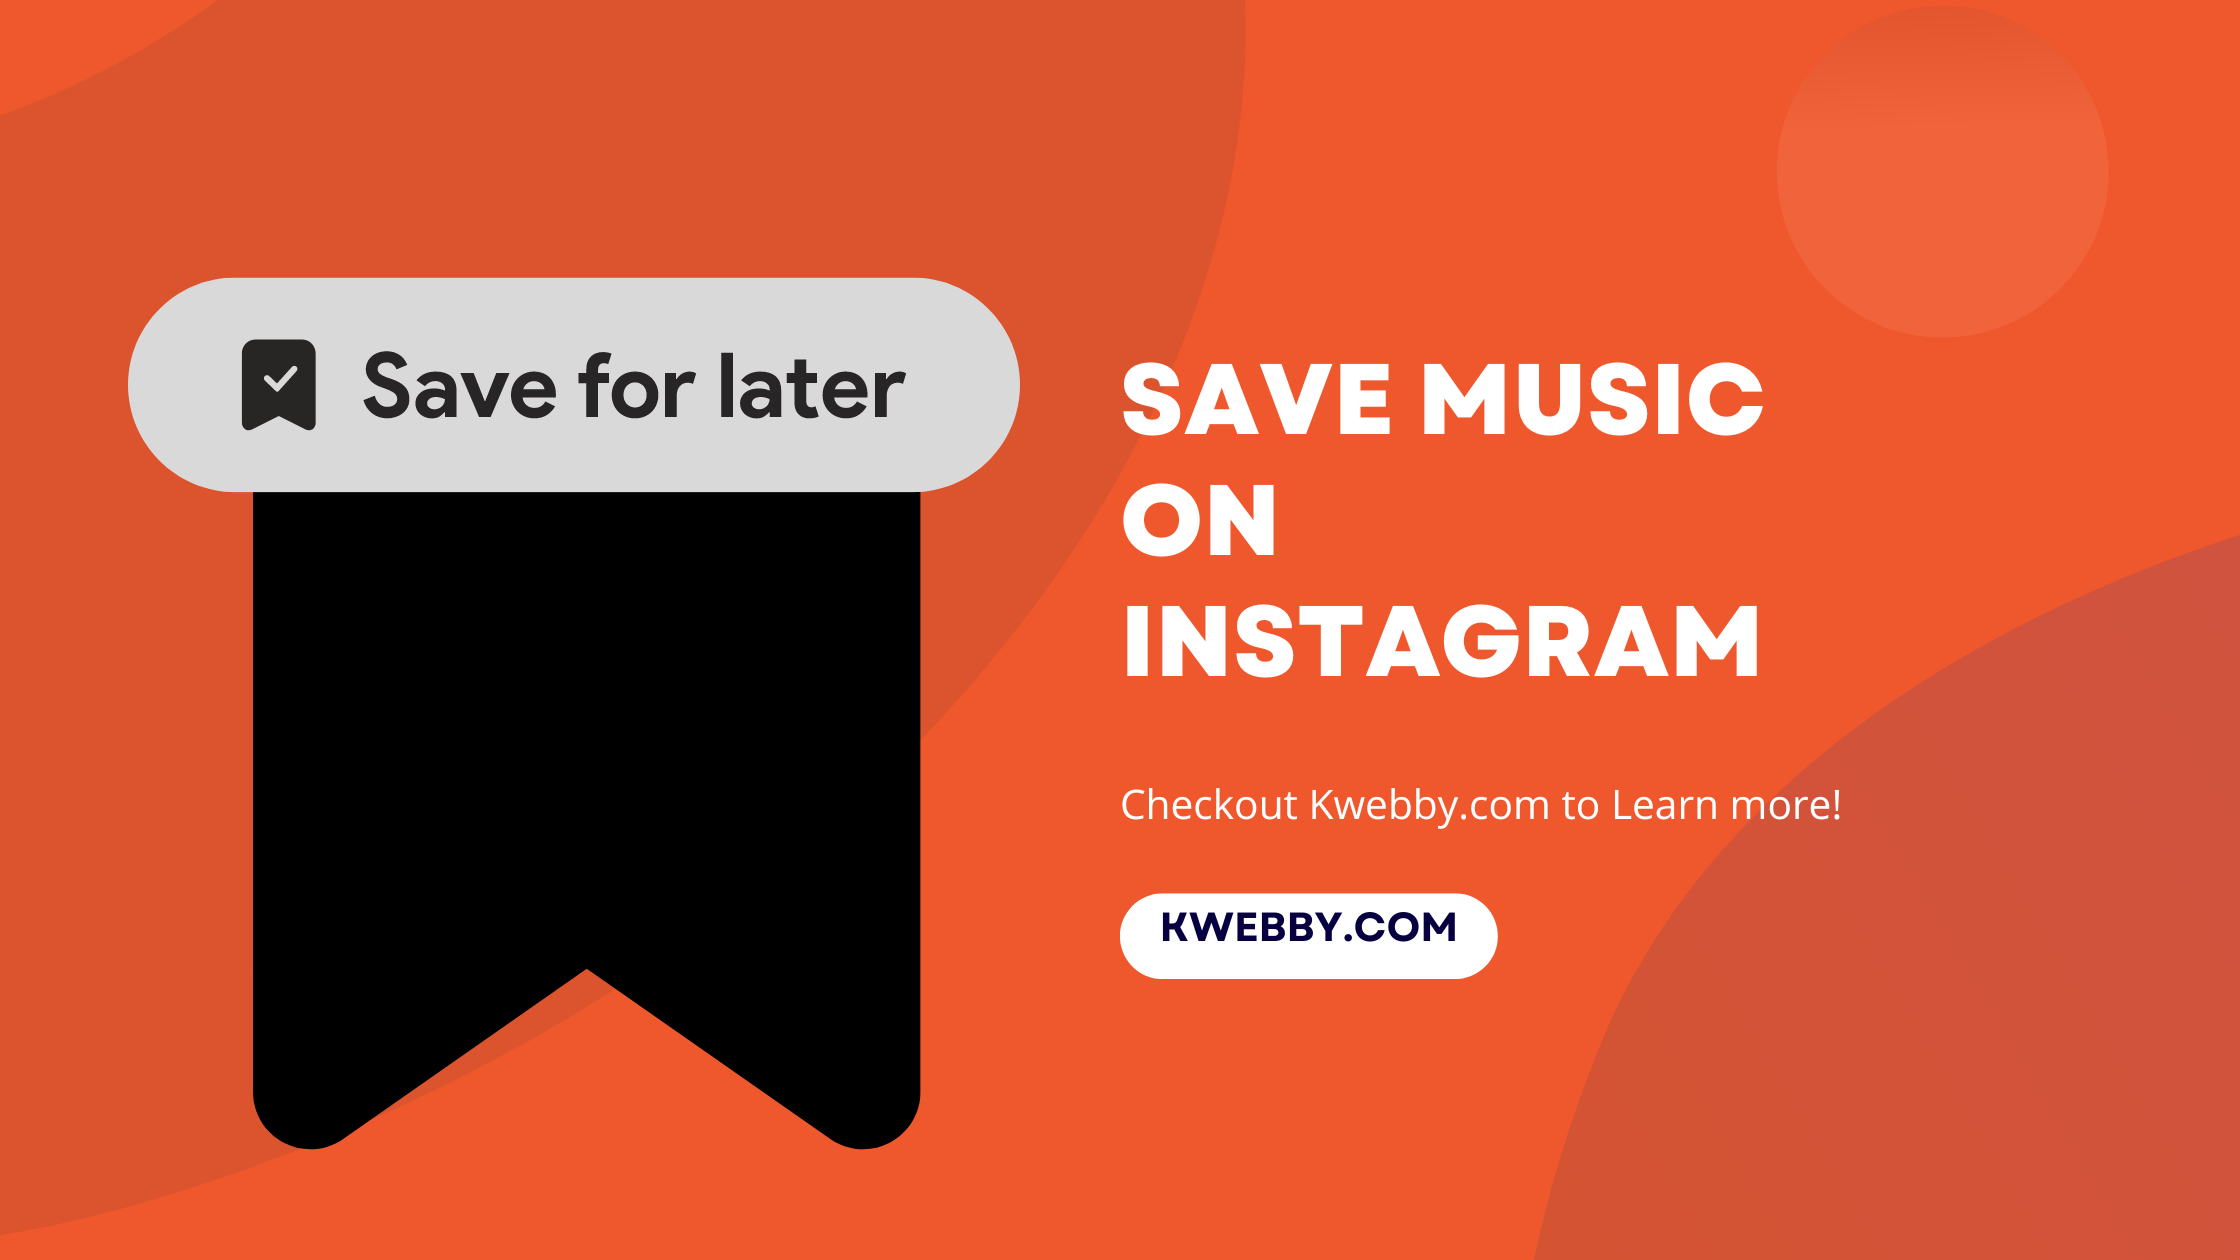 Save music on Instagram